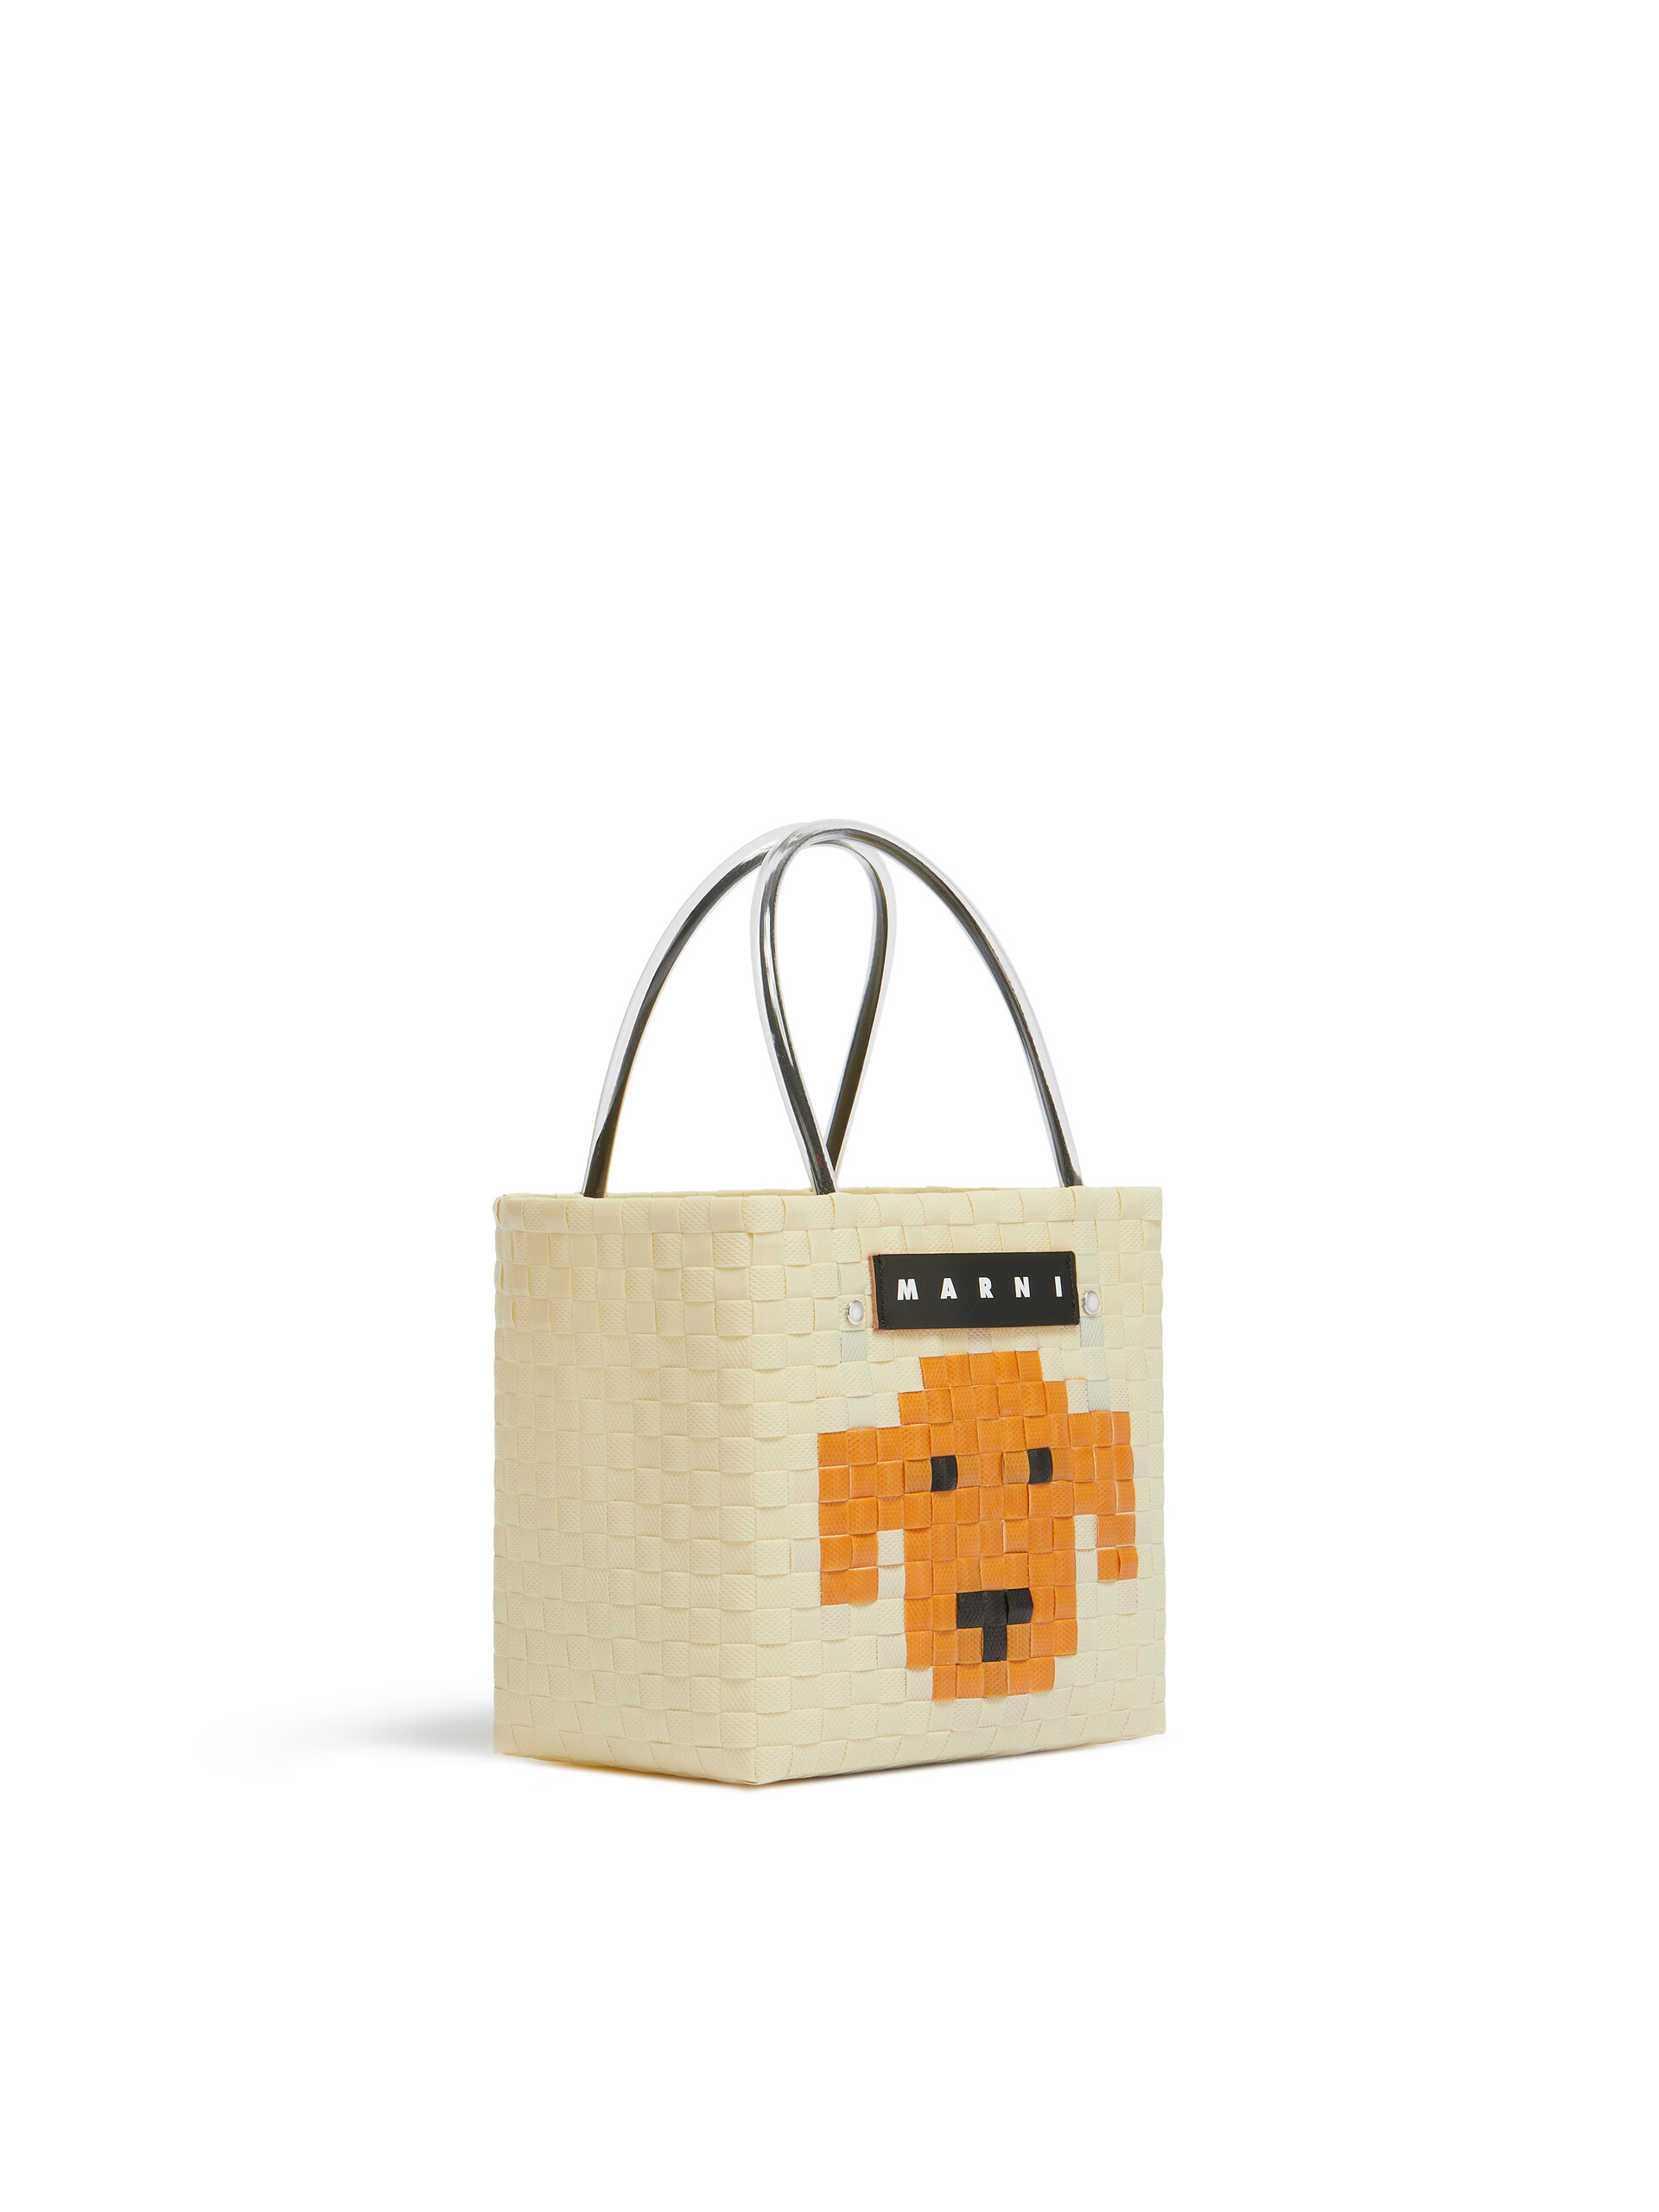 MARNI MARKET ANIMAL BASKET Tasche in Hellrosa - Shopper - Image 2